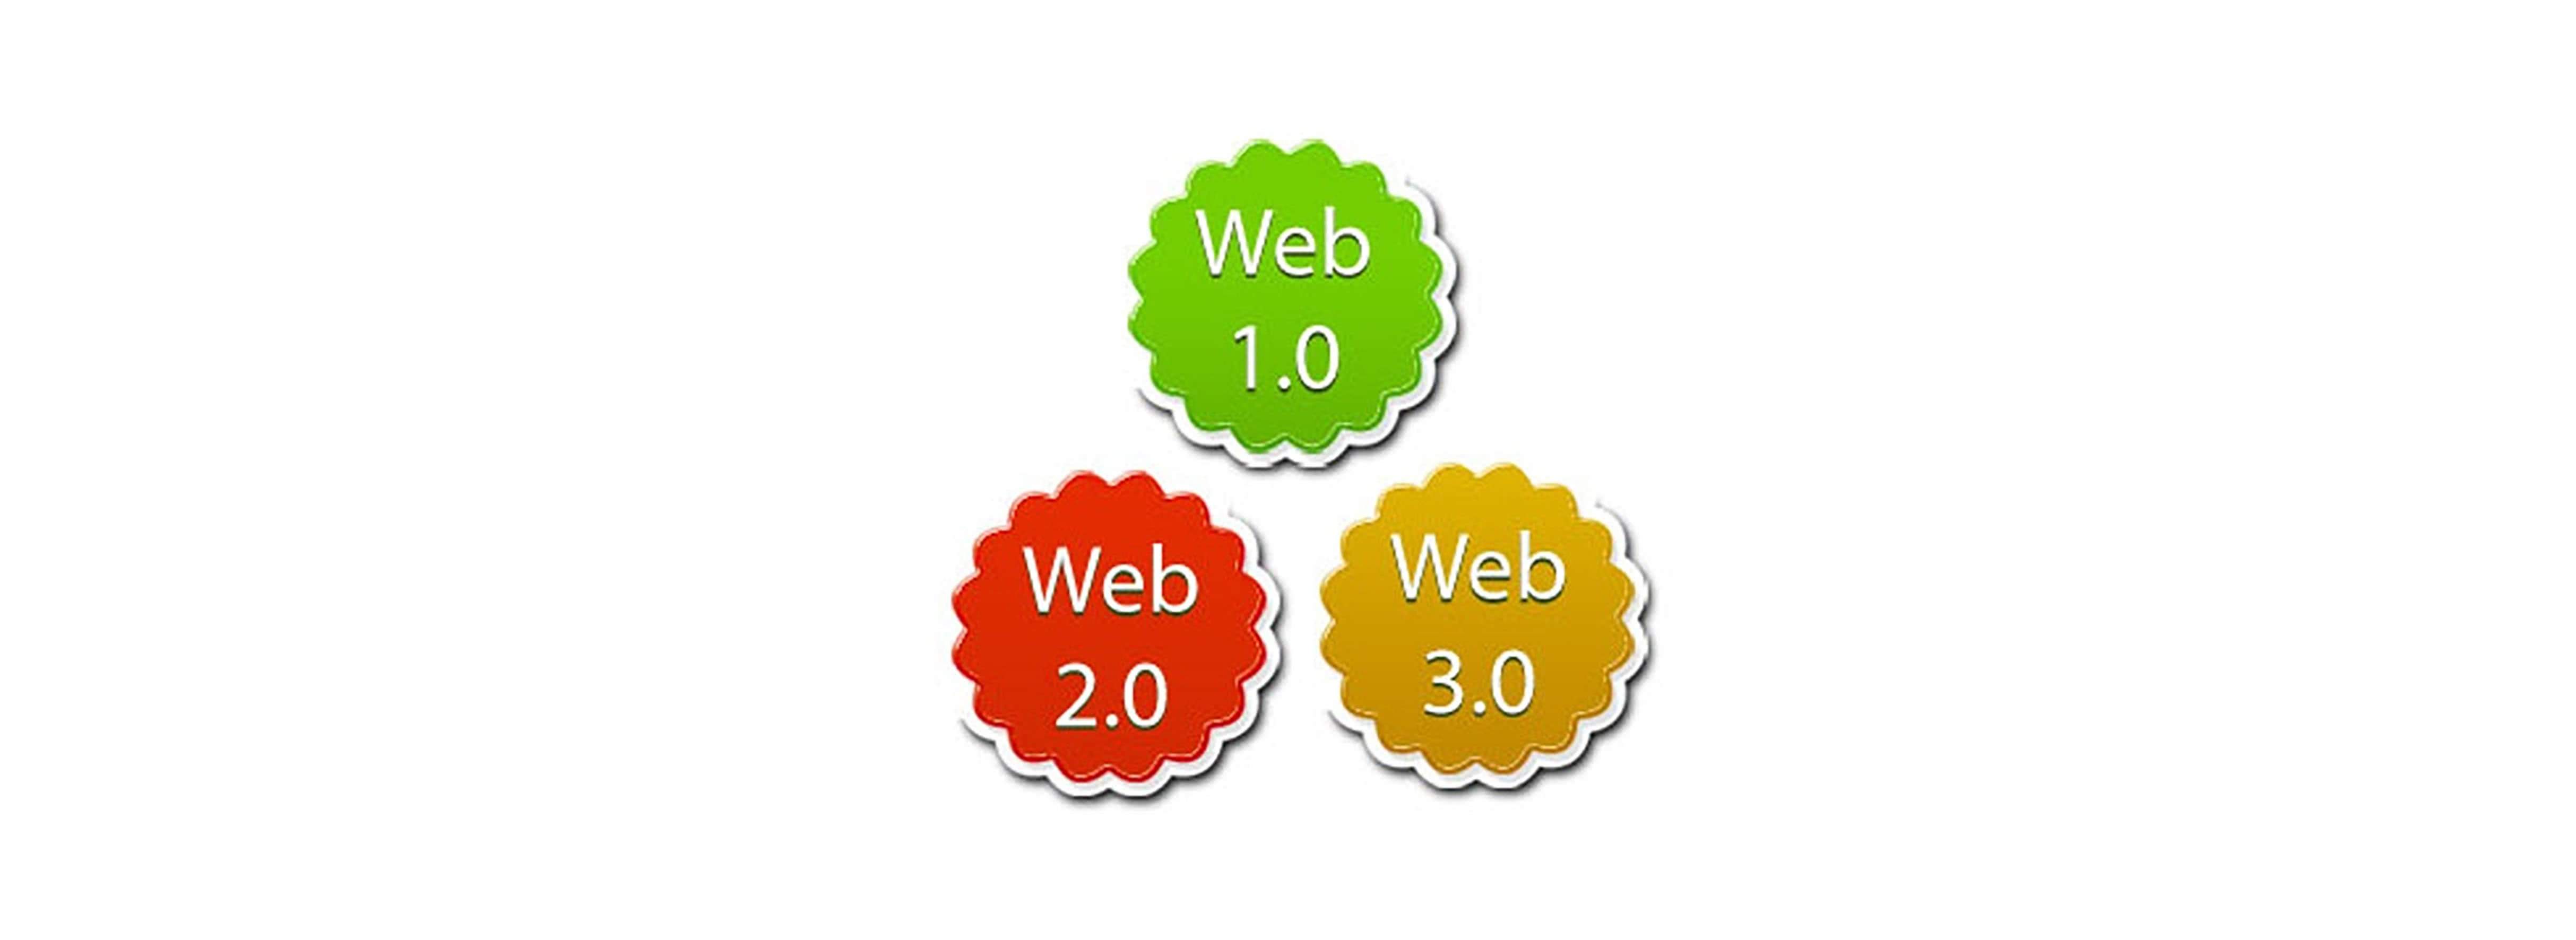 Web3 binance. Технологии web 2.0. Технология web 3.0. Web 2 web 3. Web 1.0 web 2.0 web 3.0.